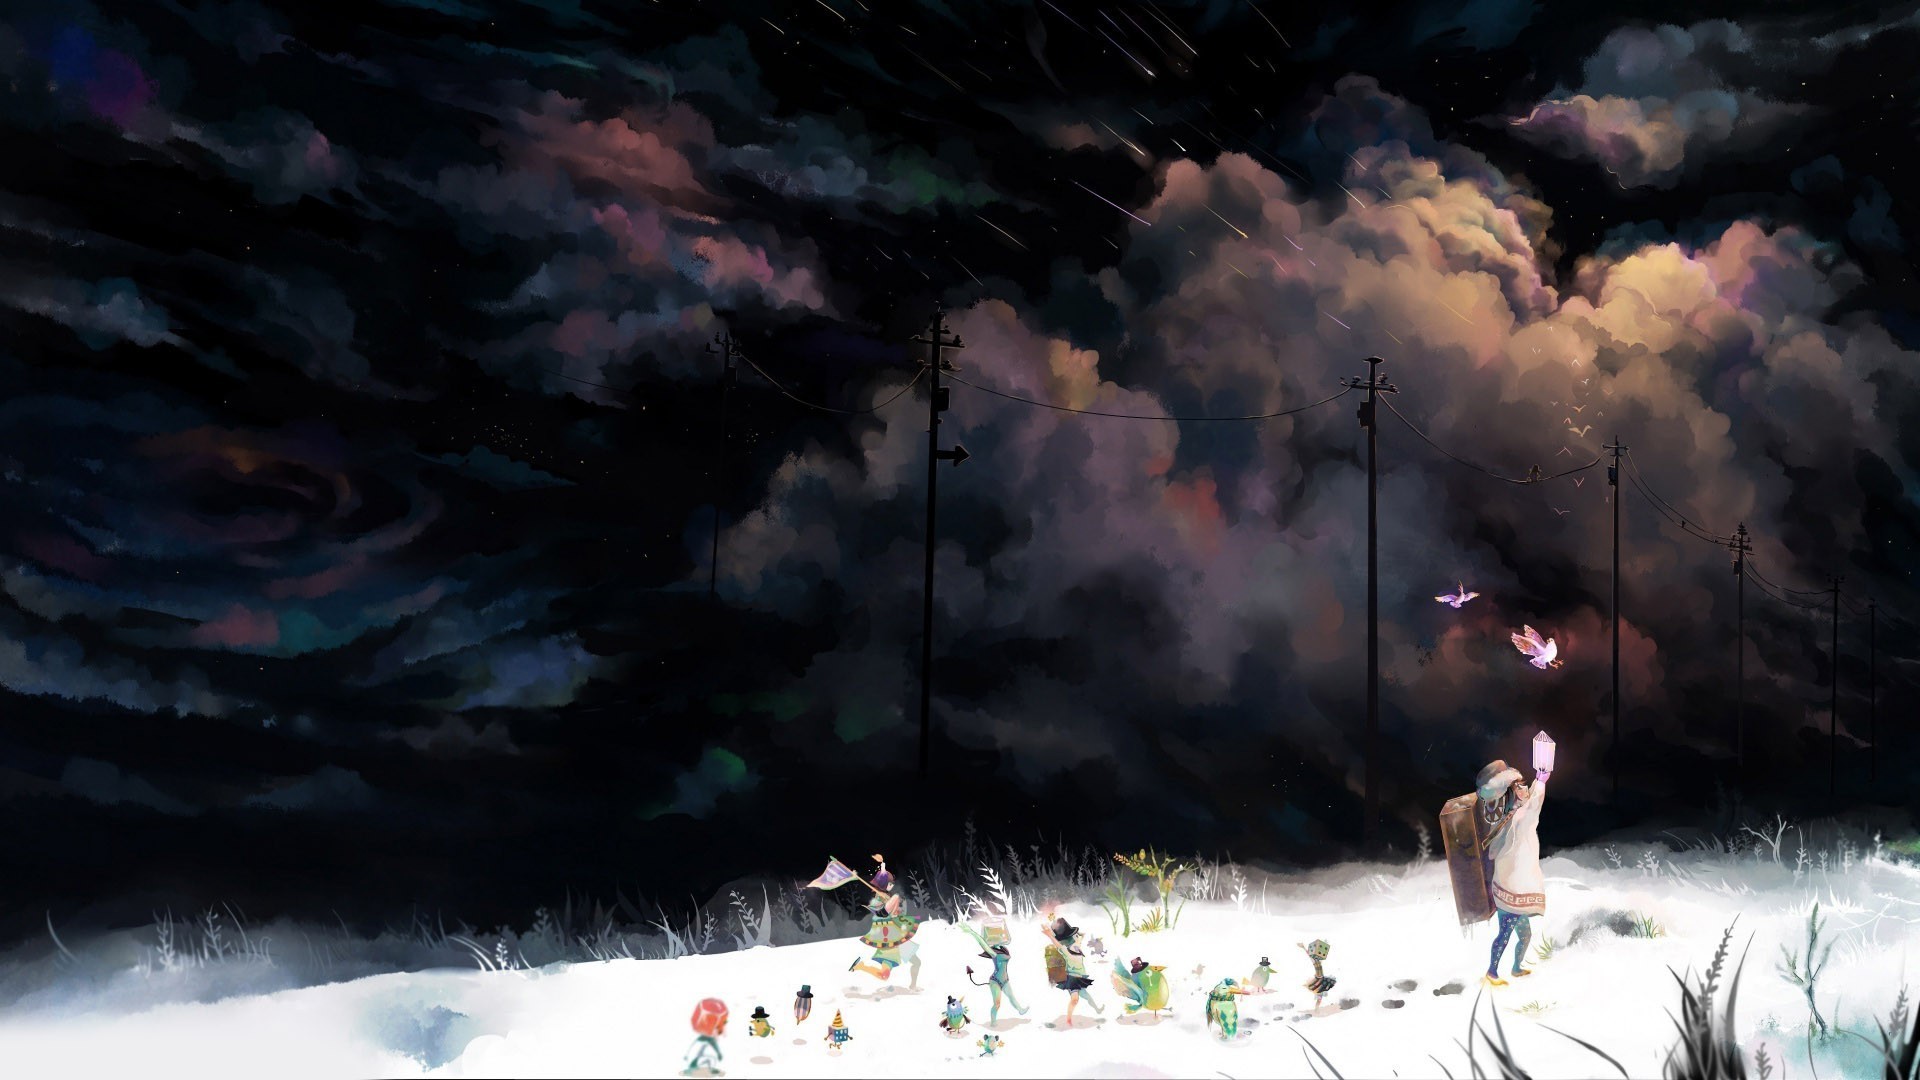 night wallpaper download,nature,sky,atmosphere,cloud,illustration